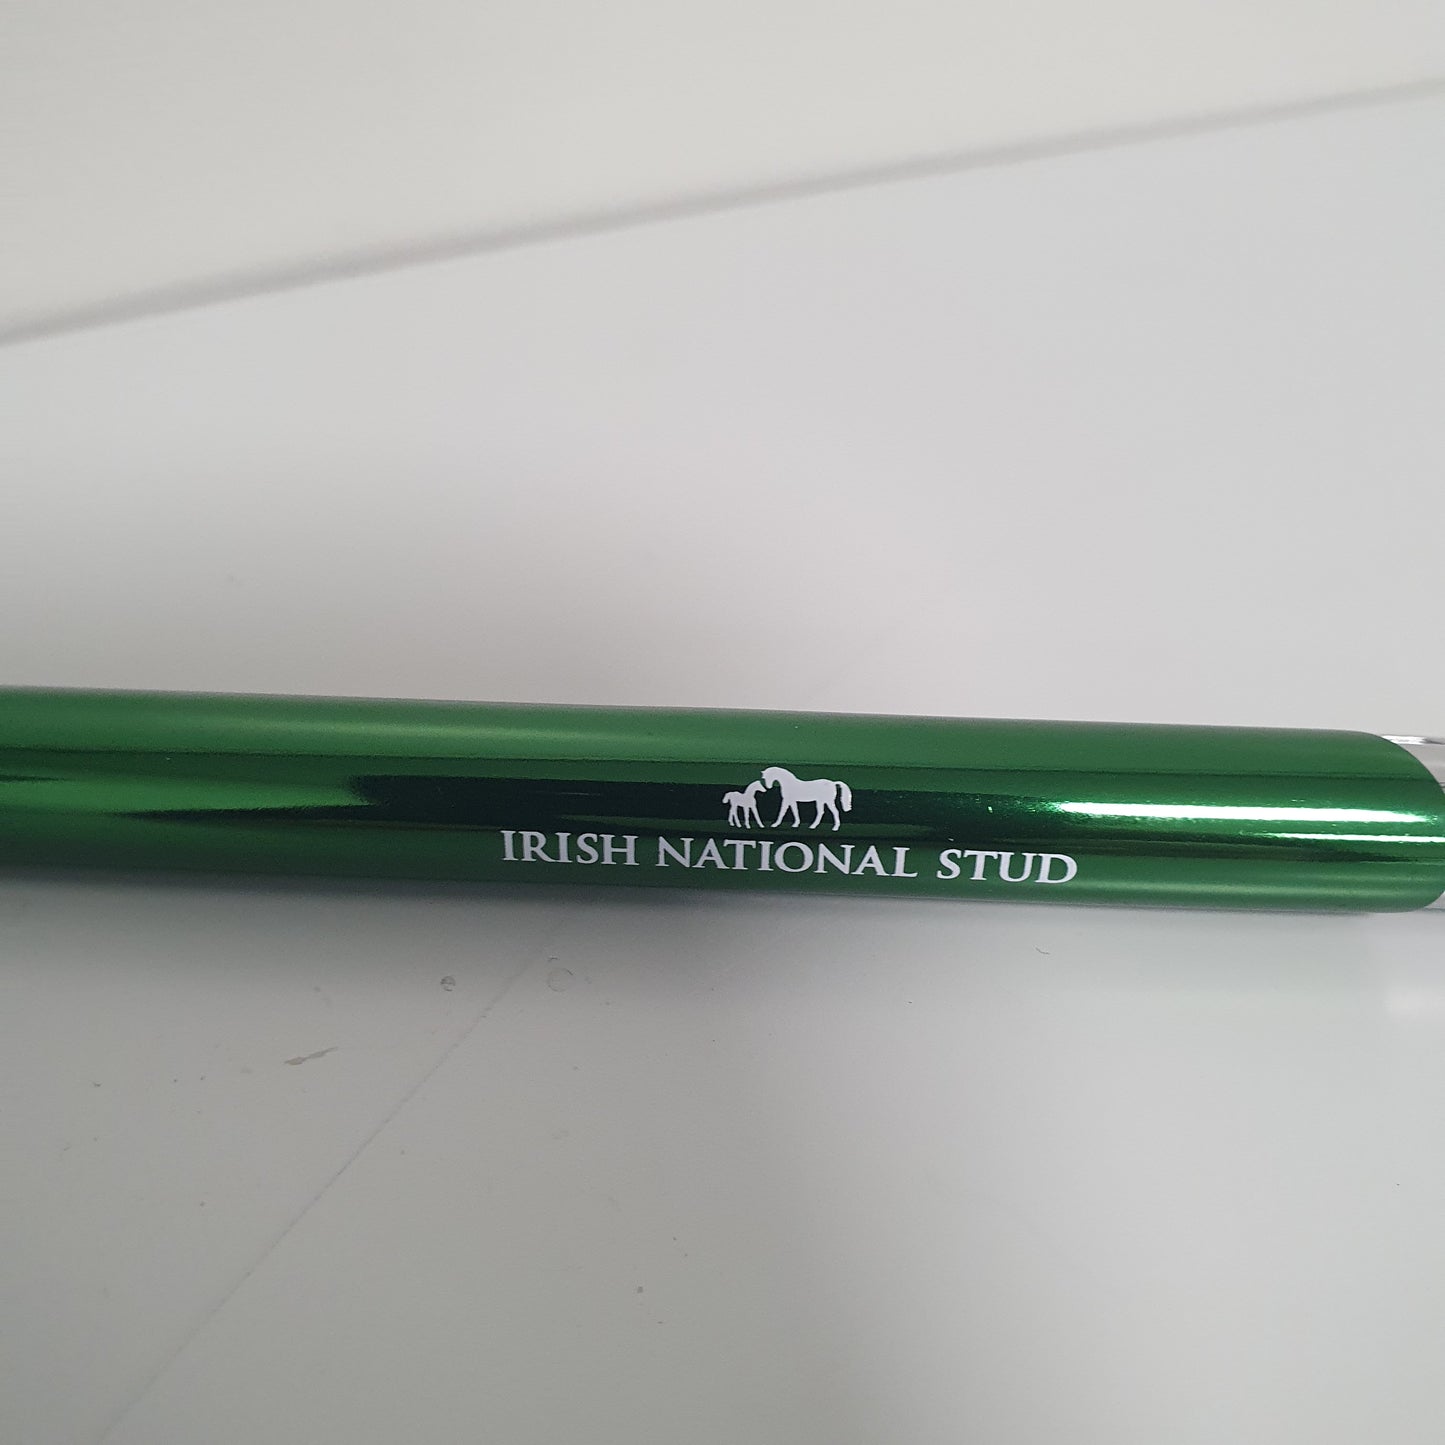 BESPOKE IRISH NATIONAL STUD PEN